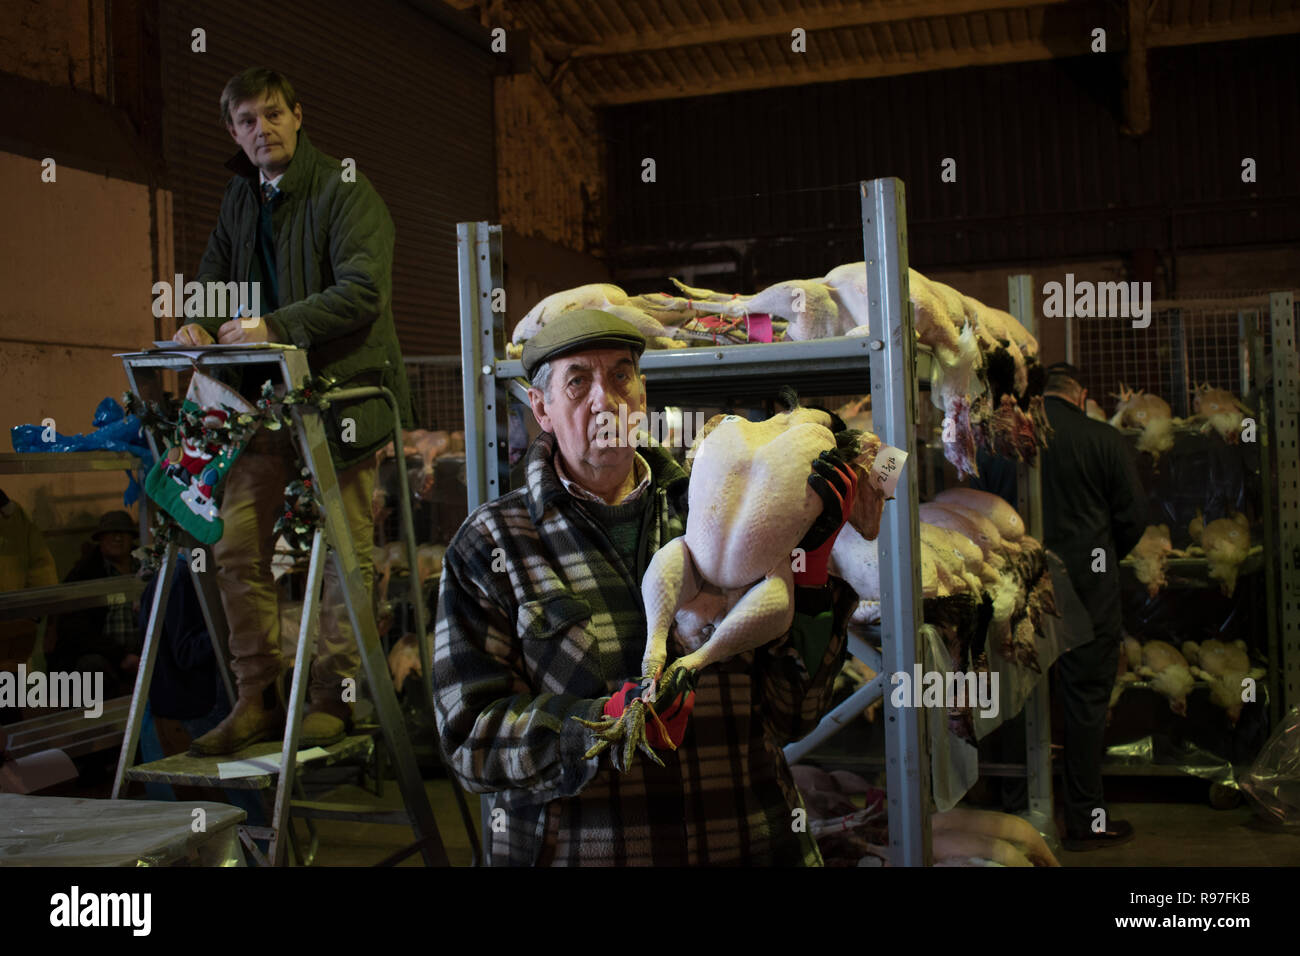 Christmas market and auction of turkeys Norfolk England Uk 2010s. 2018 HOMER SYKES Stock Photo